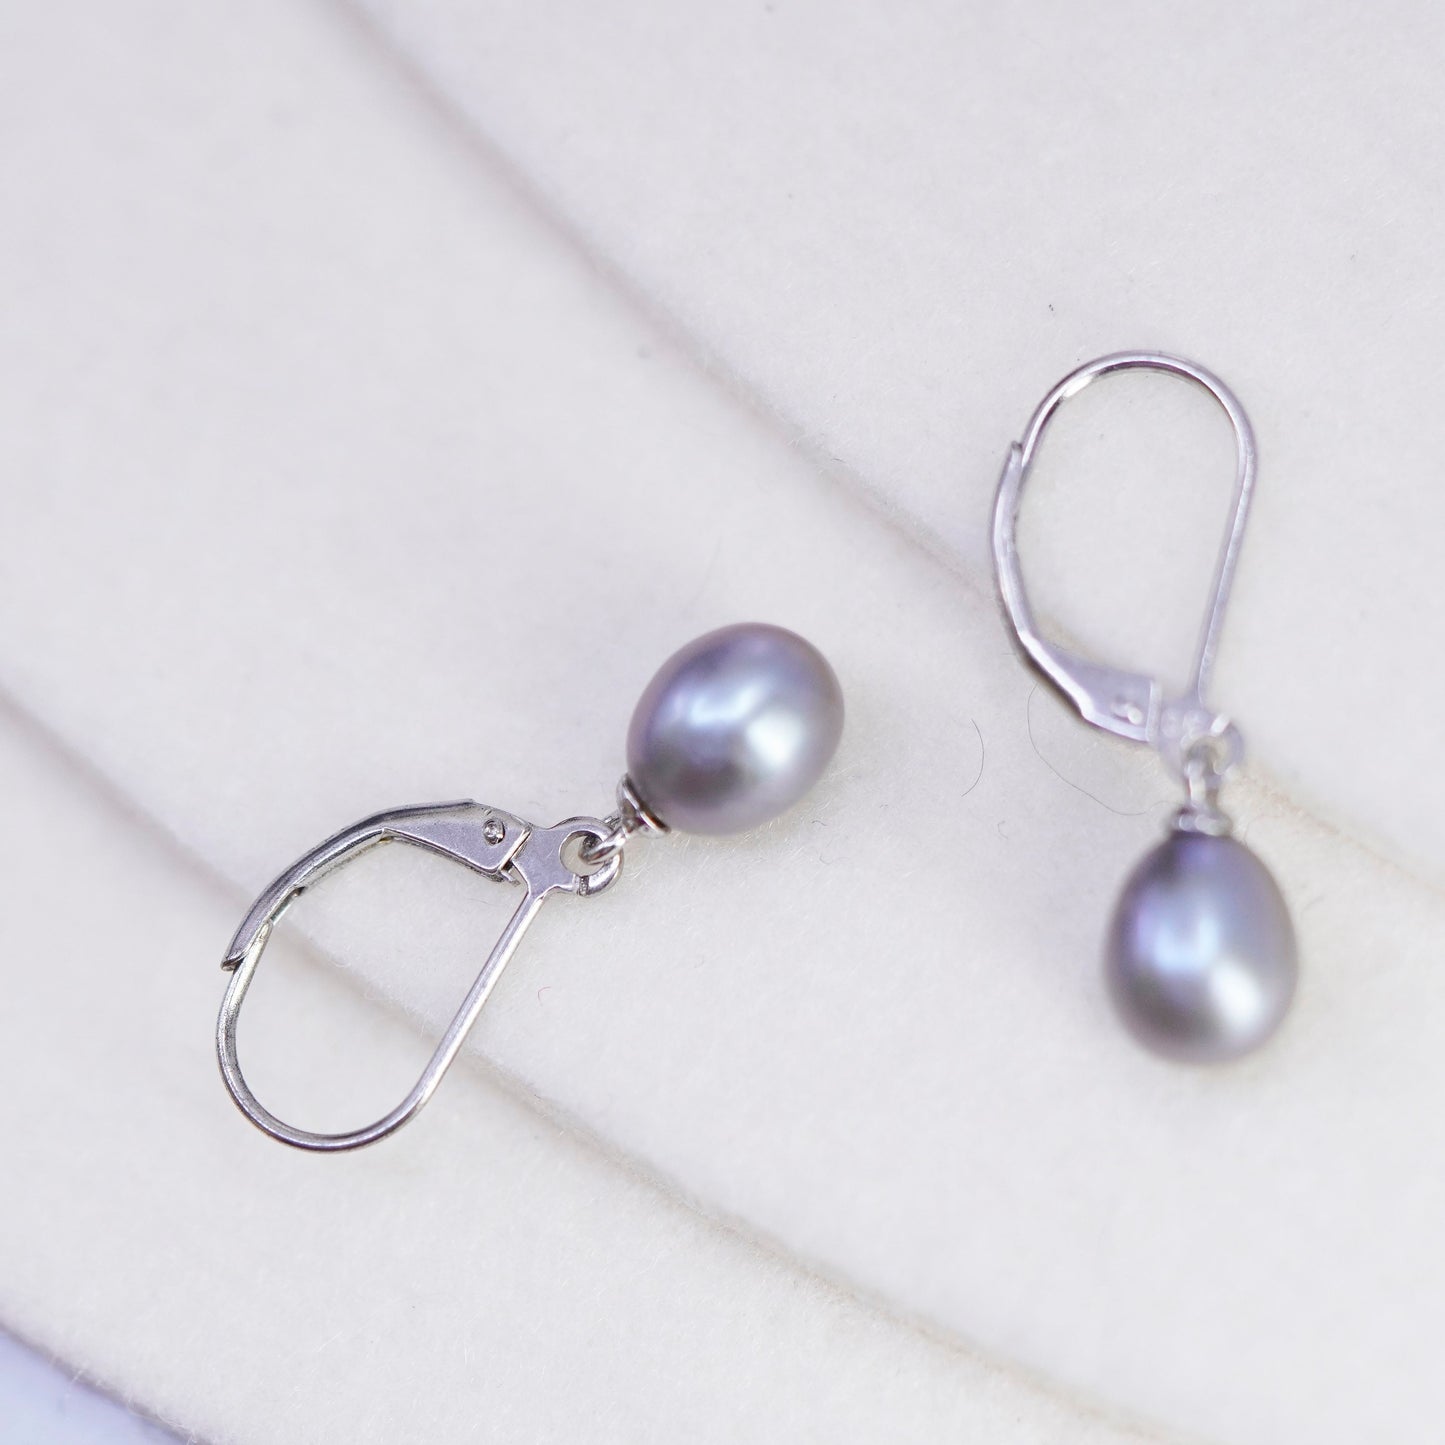 Vintage Sterling 925 silver handmade earrings with freshwater gray pearl